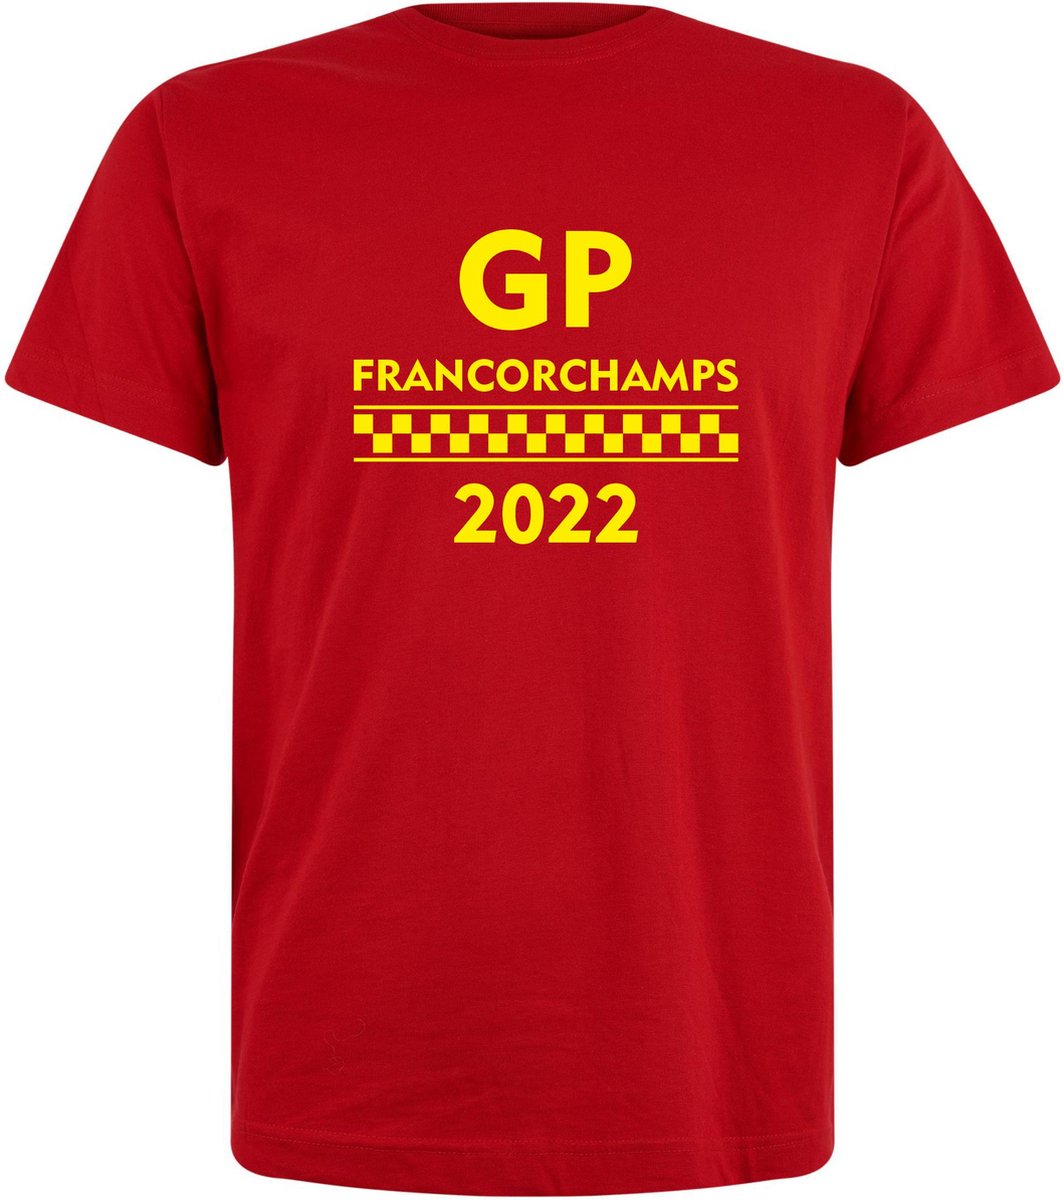 T-shirt kinderen GP Francorchamps 2022 | Max Verstappen / Red Bull Racing / Formule 1 fan | Grand Prix Circuit Spa-Francorchamps | kleding shirt | Rood | maat 116